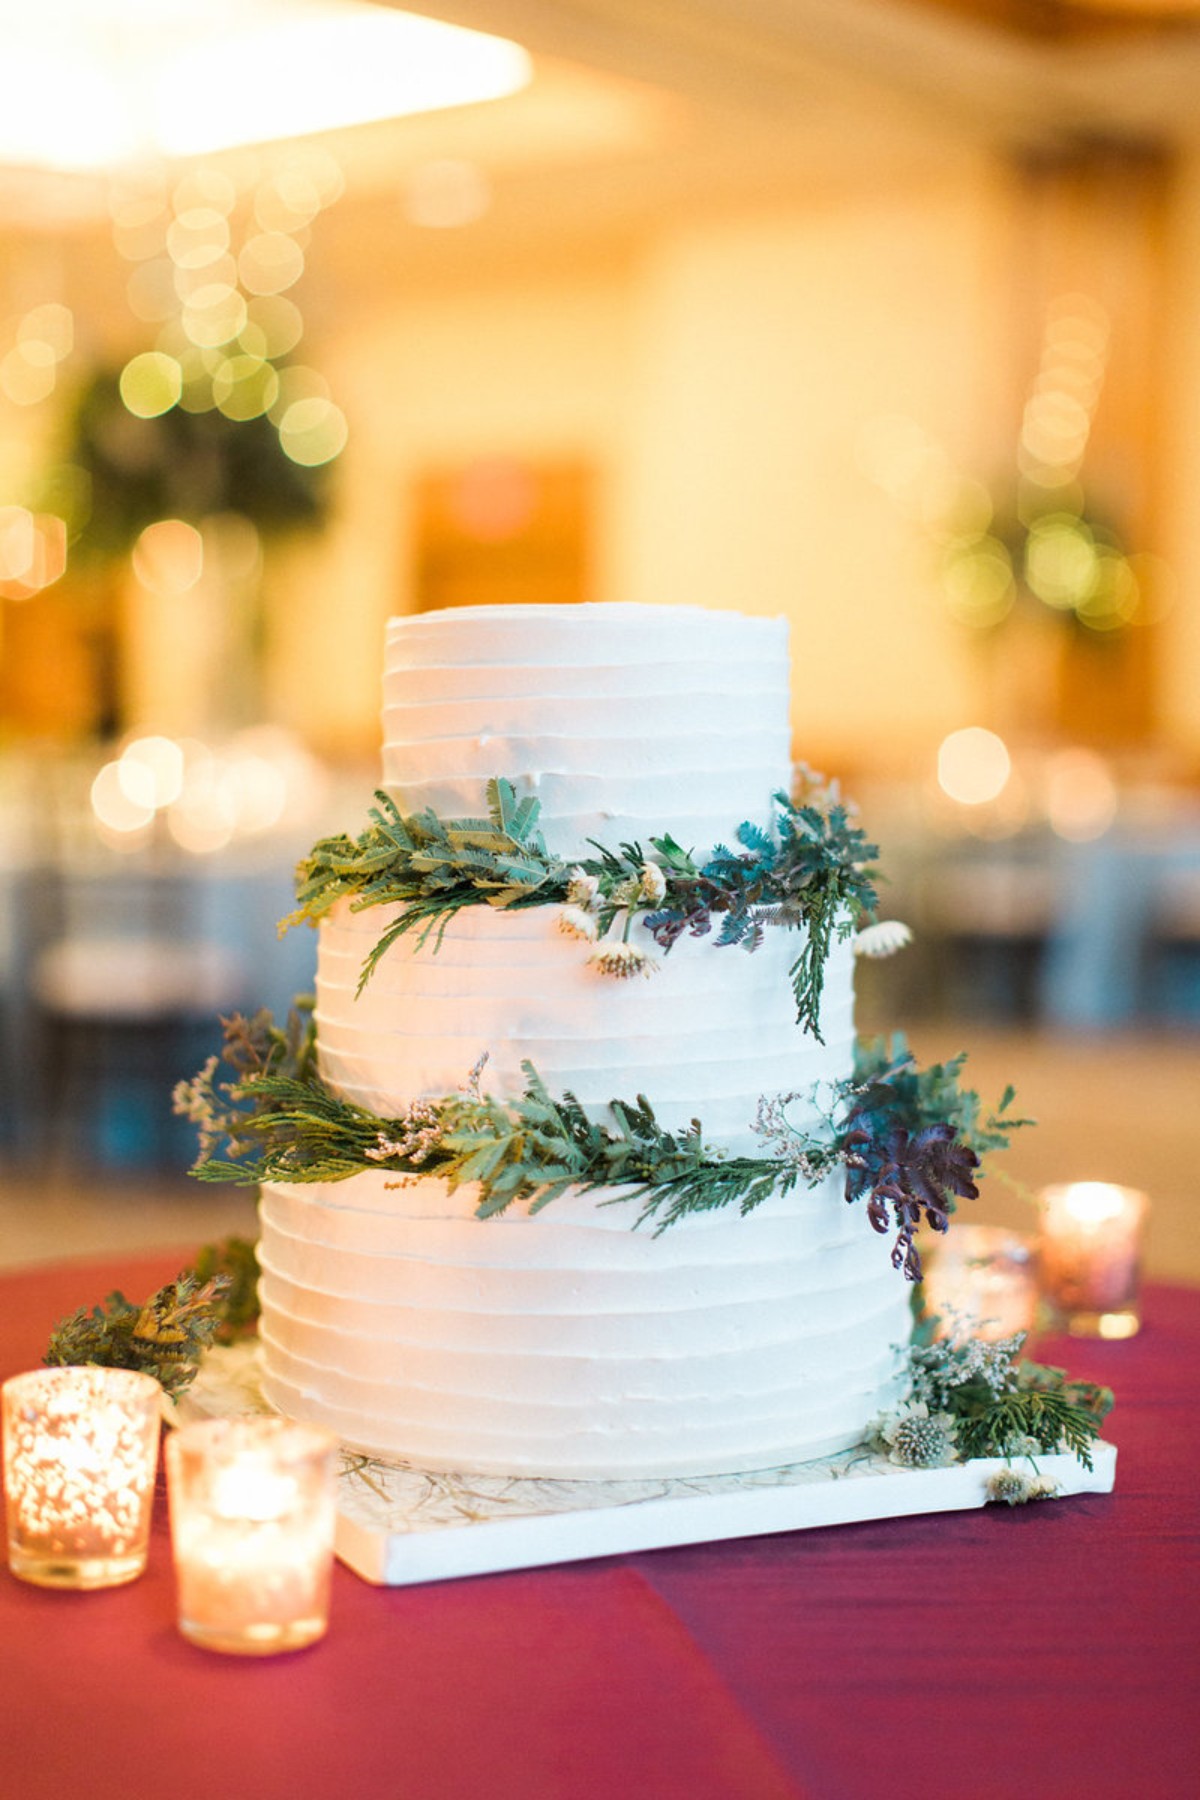 White wedding cake with greenery